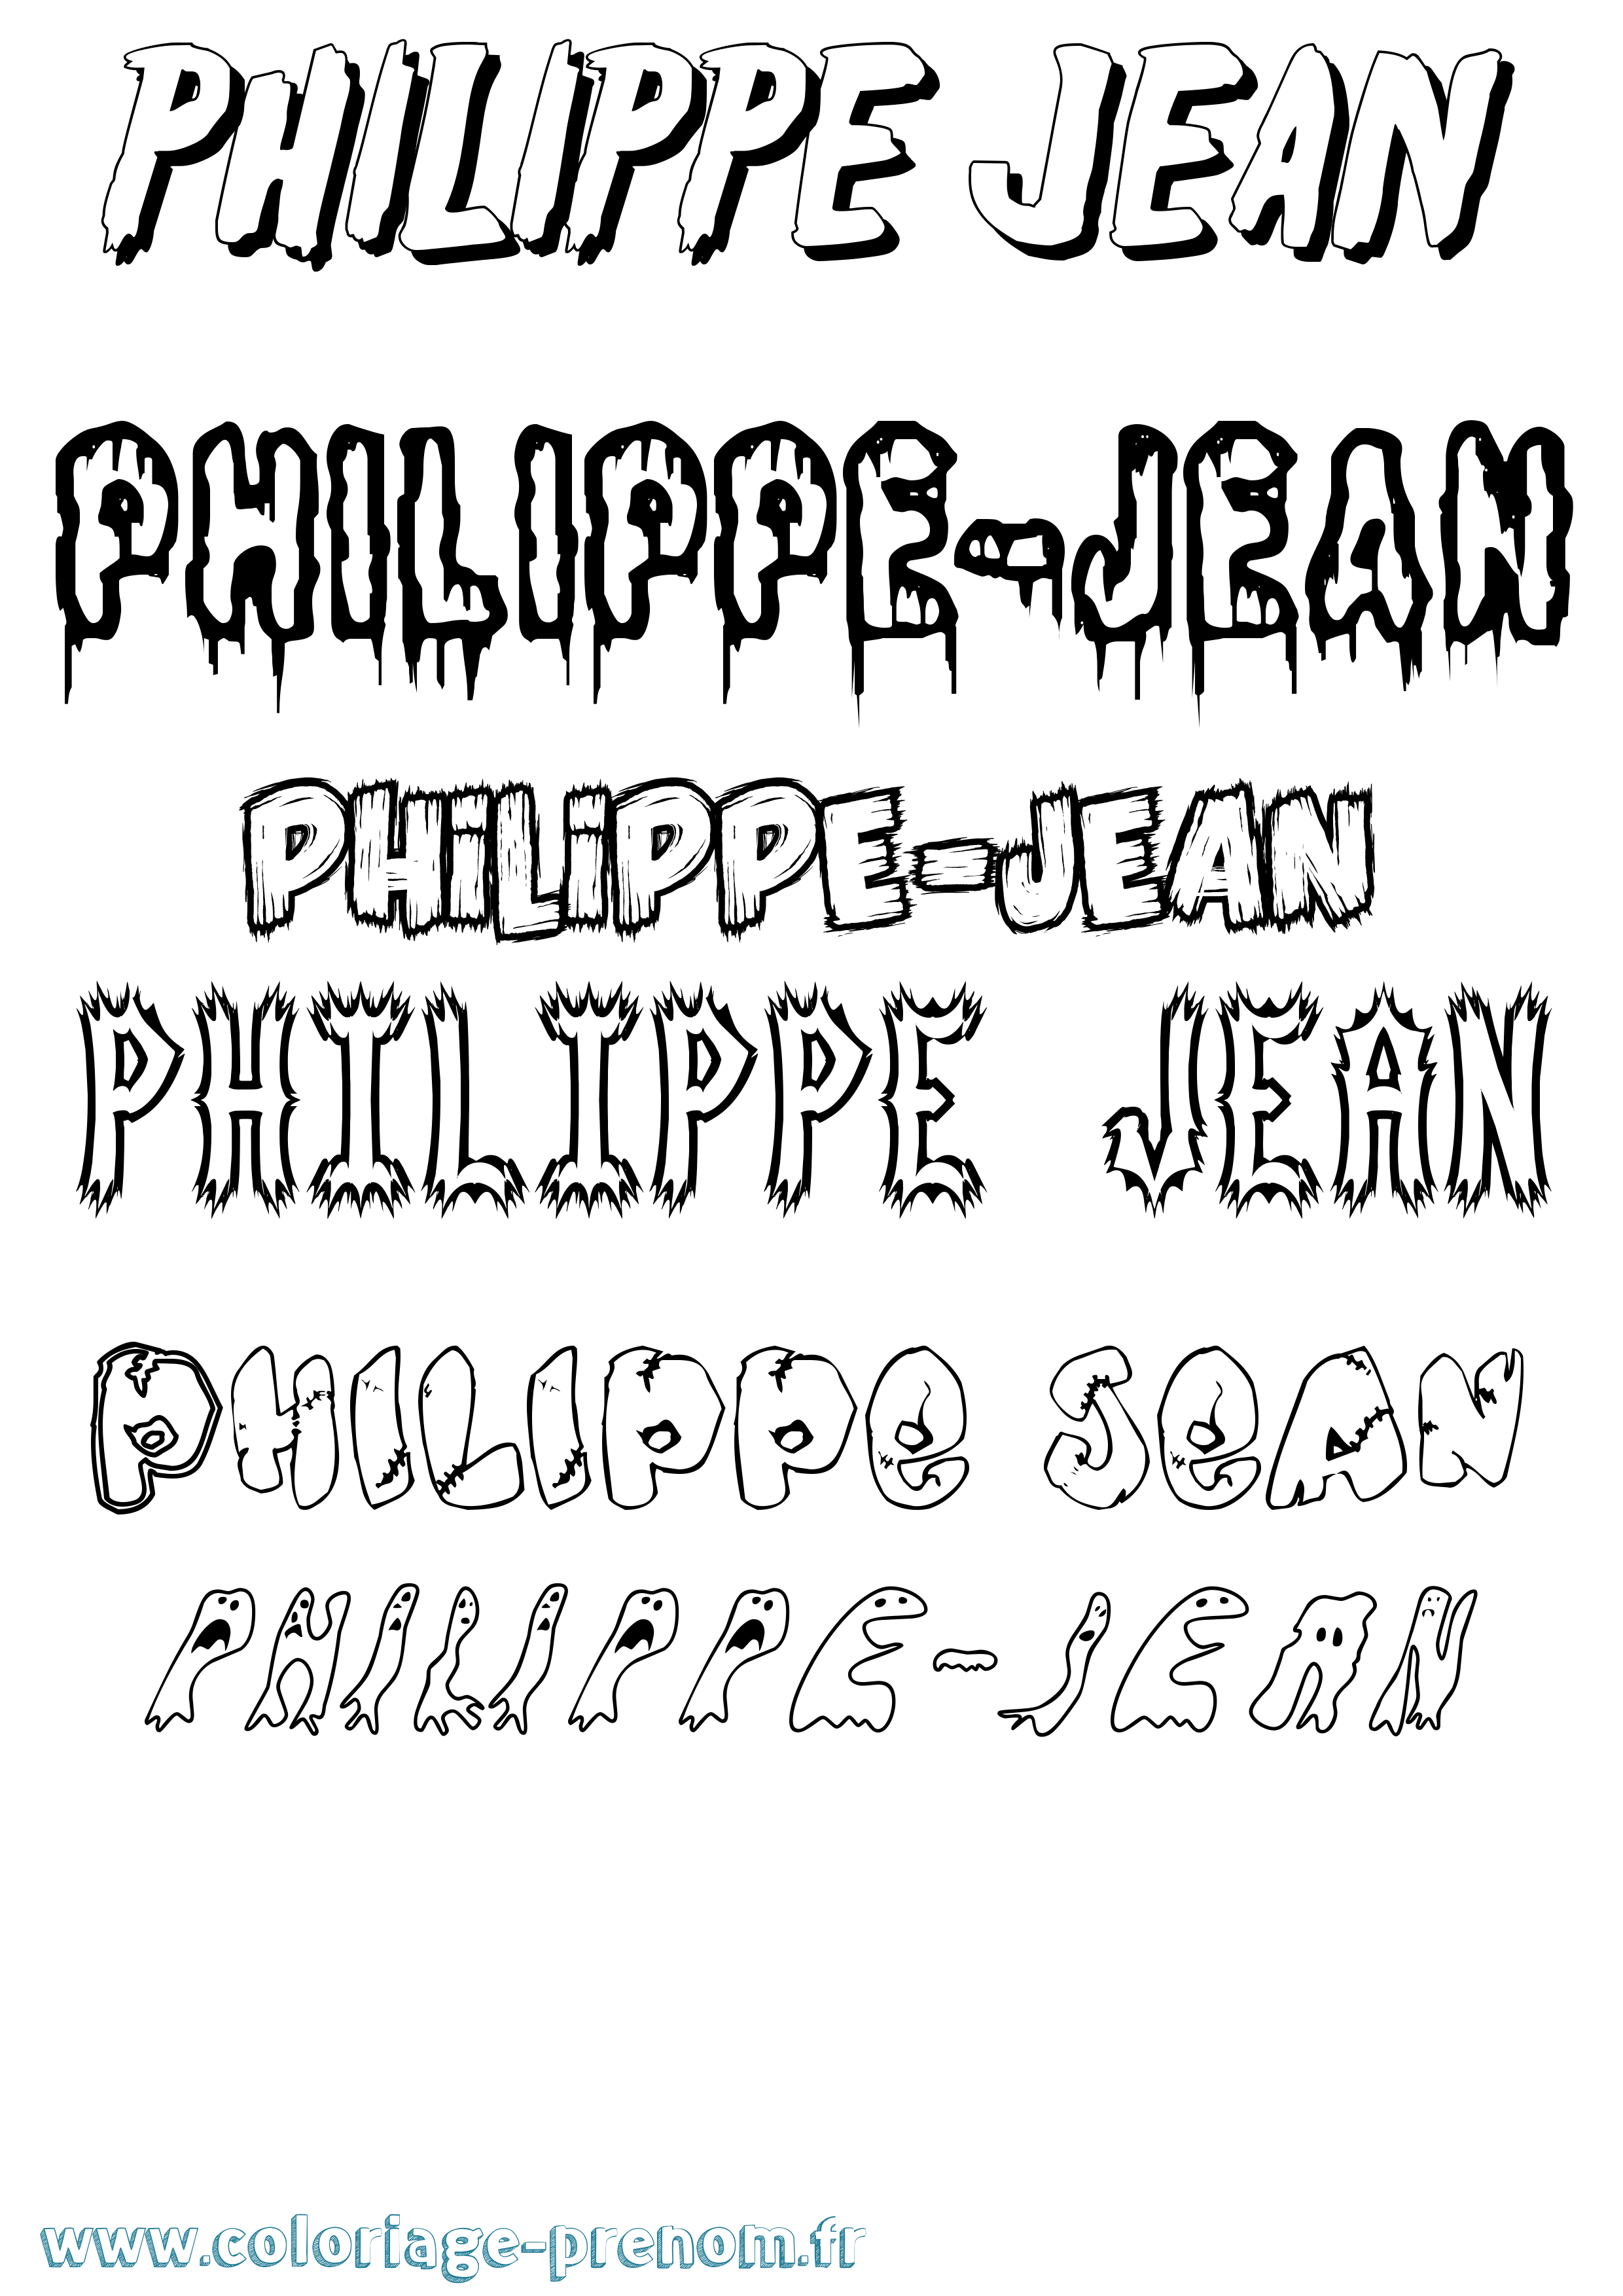 Coloriage prénom Philippe-Jean Frisson